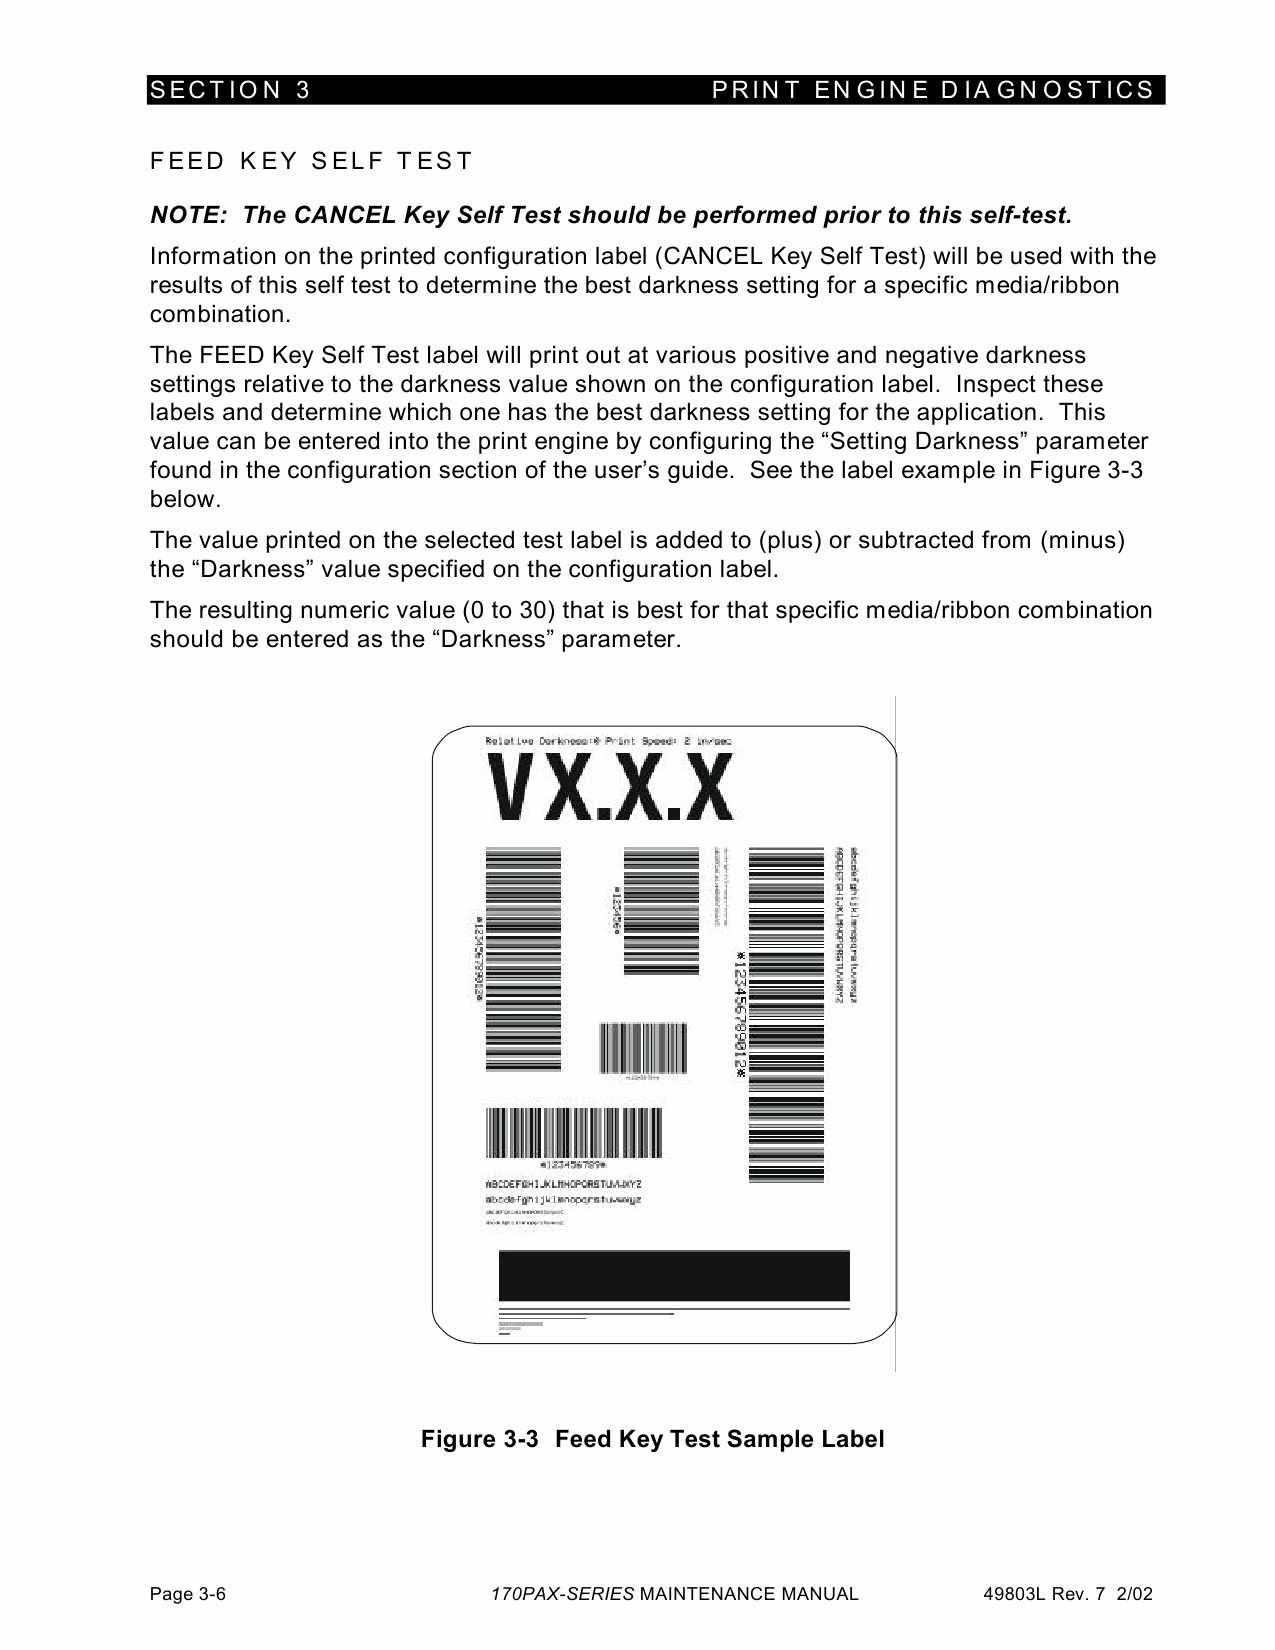 Zebra Label 170PAX Maintenance Service Manual-3